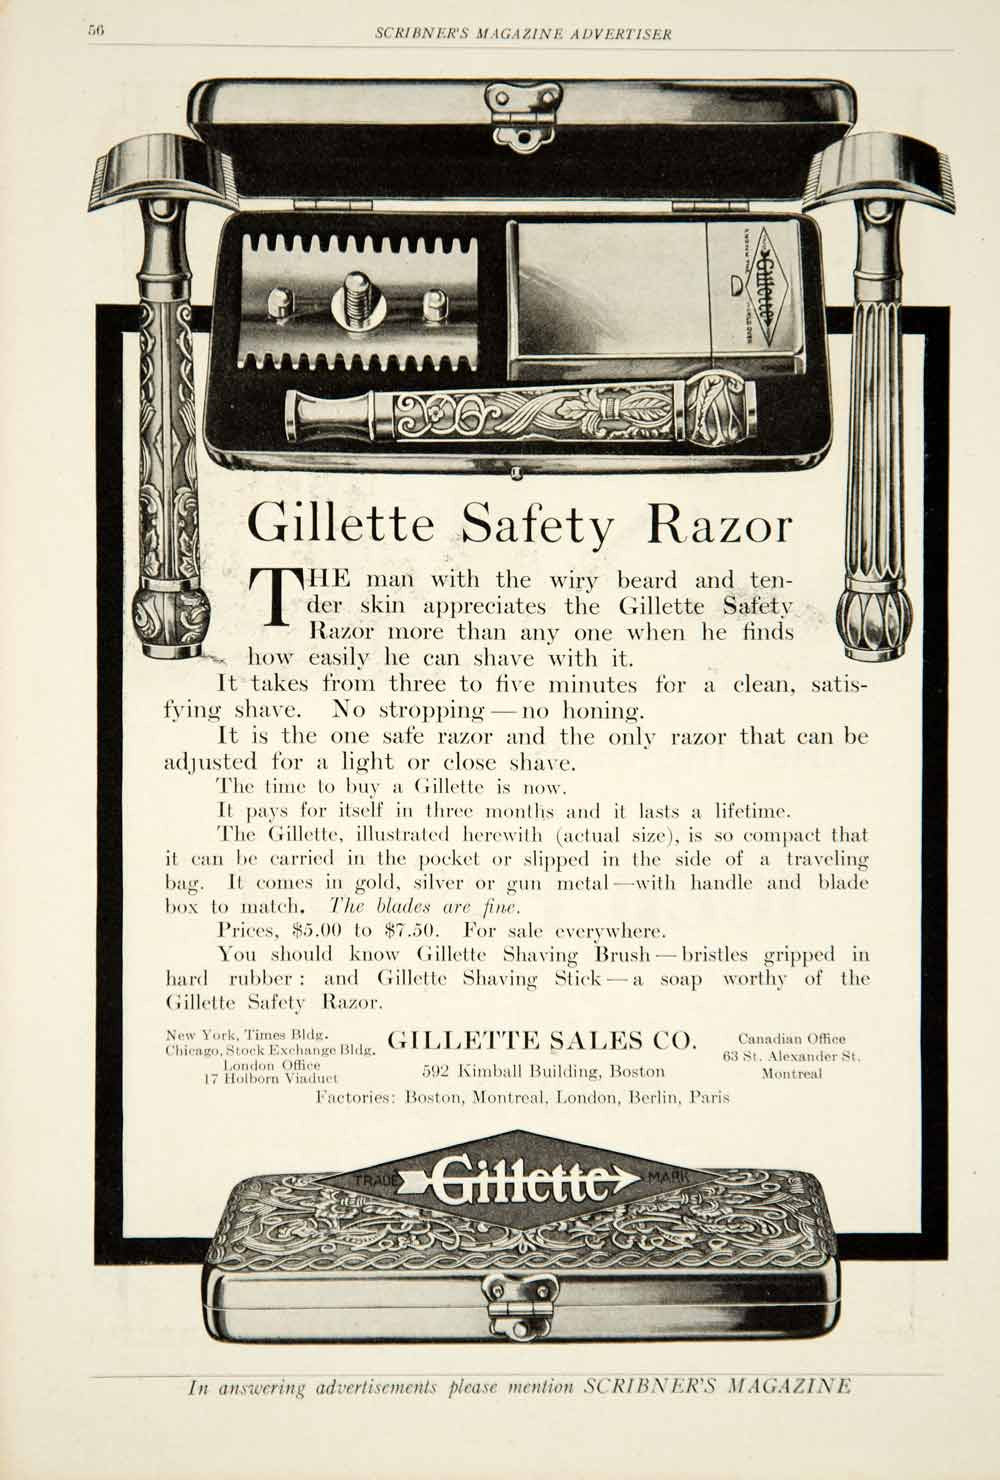 1909 Ad Gillette Safety Razor Shaving Kit Brush Stick Soap Health Beauty YSC1 - Period Paper
